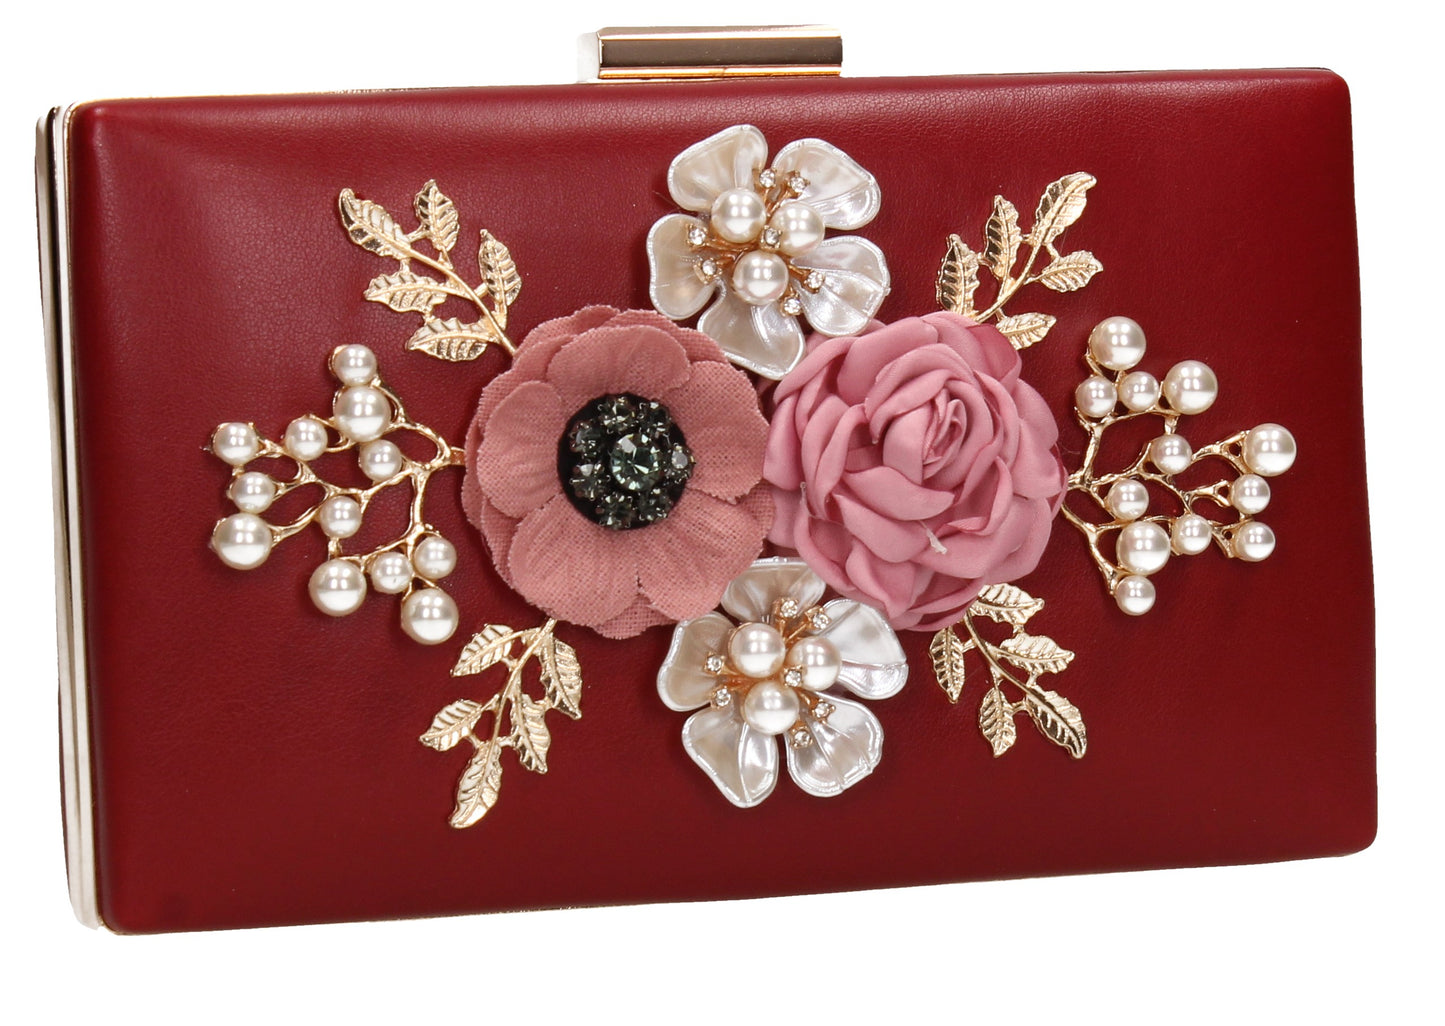 SWANKYSWANS Valery Floral Detail Clutch Bag Burgundy Cute Cheap Clutch Bag For Weddings School and Work